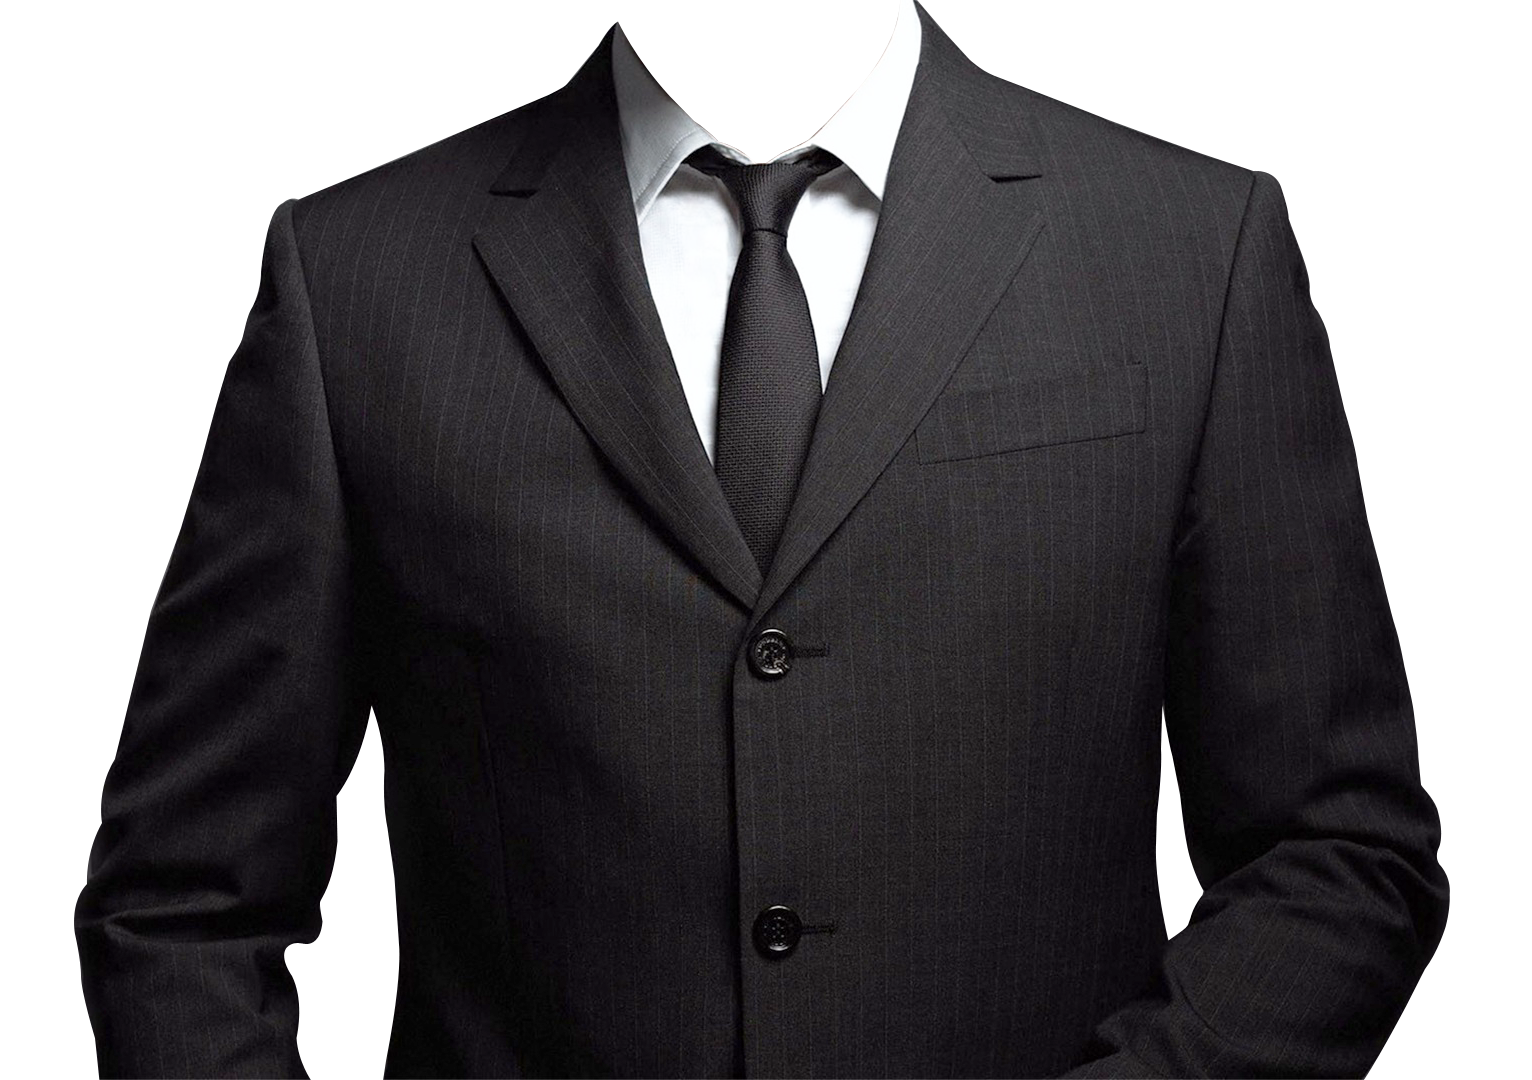 Blazer Black Suit HQ Image Free PNG Image